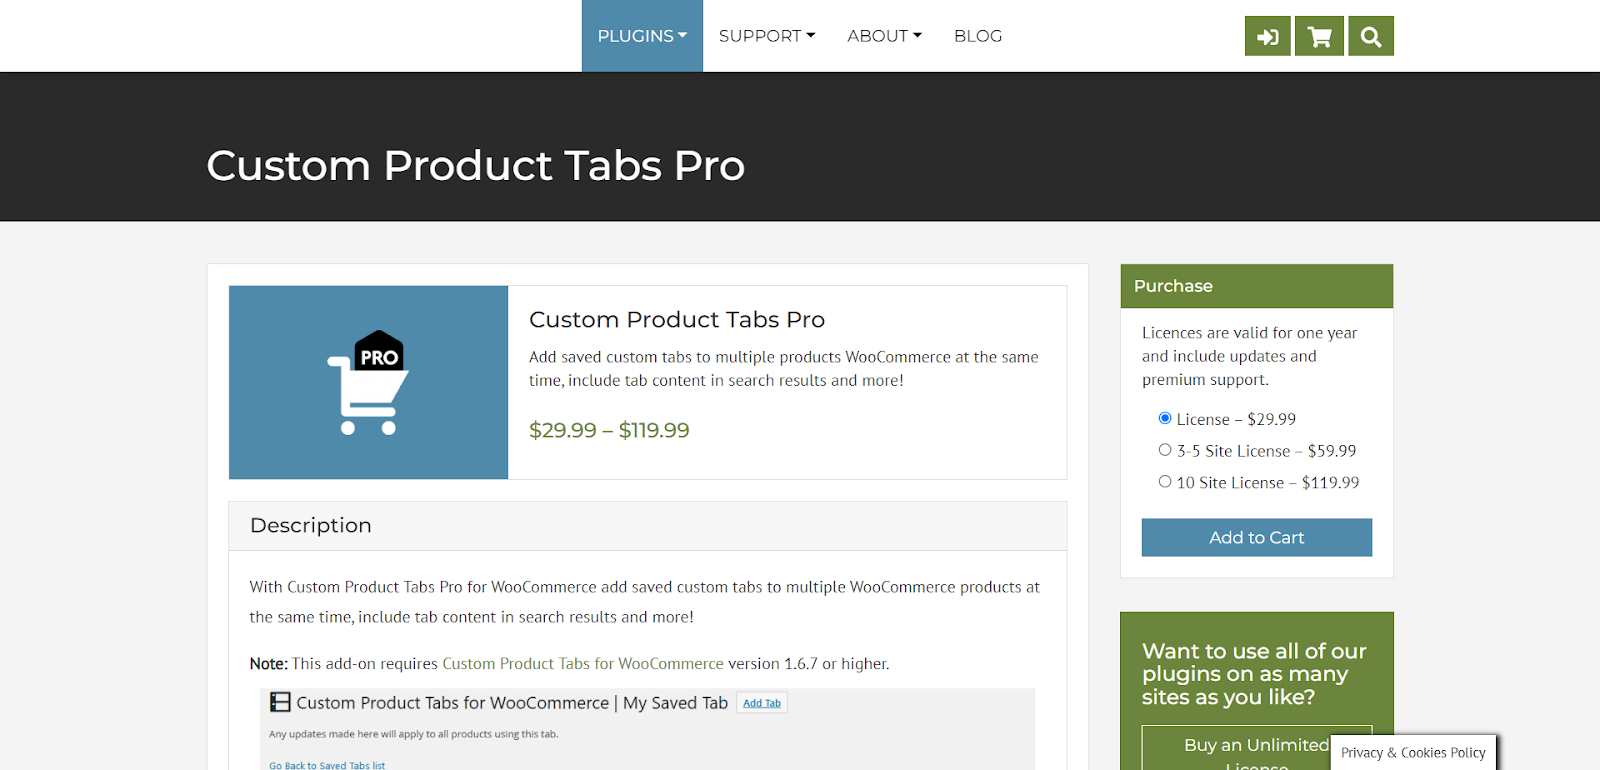 Custom Product Tabs Pro